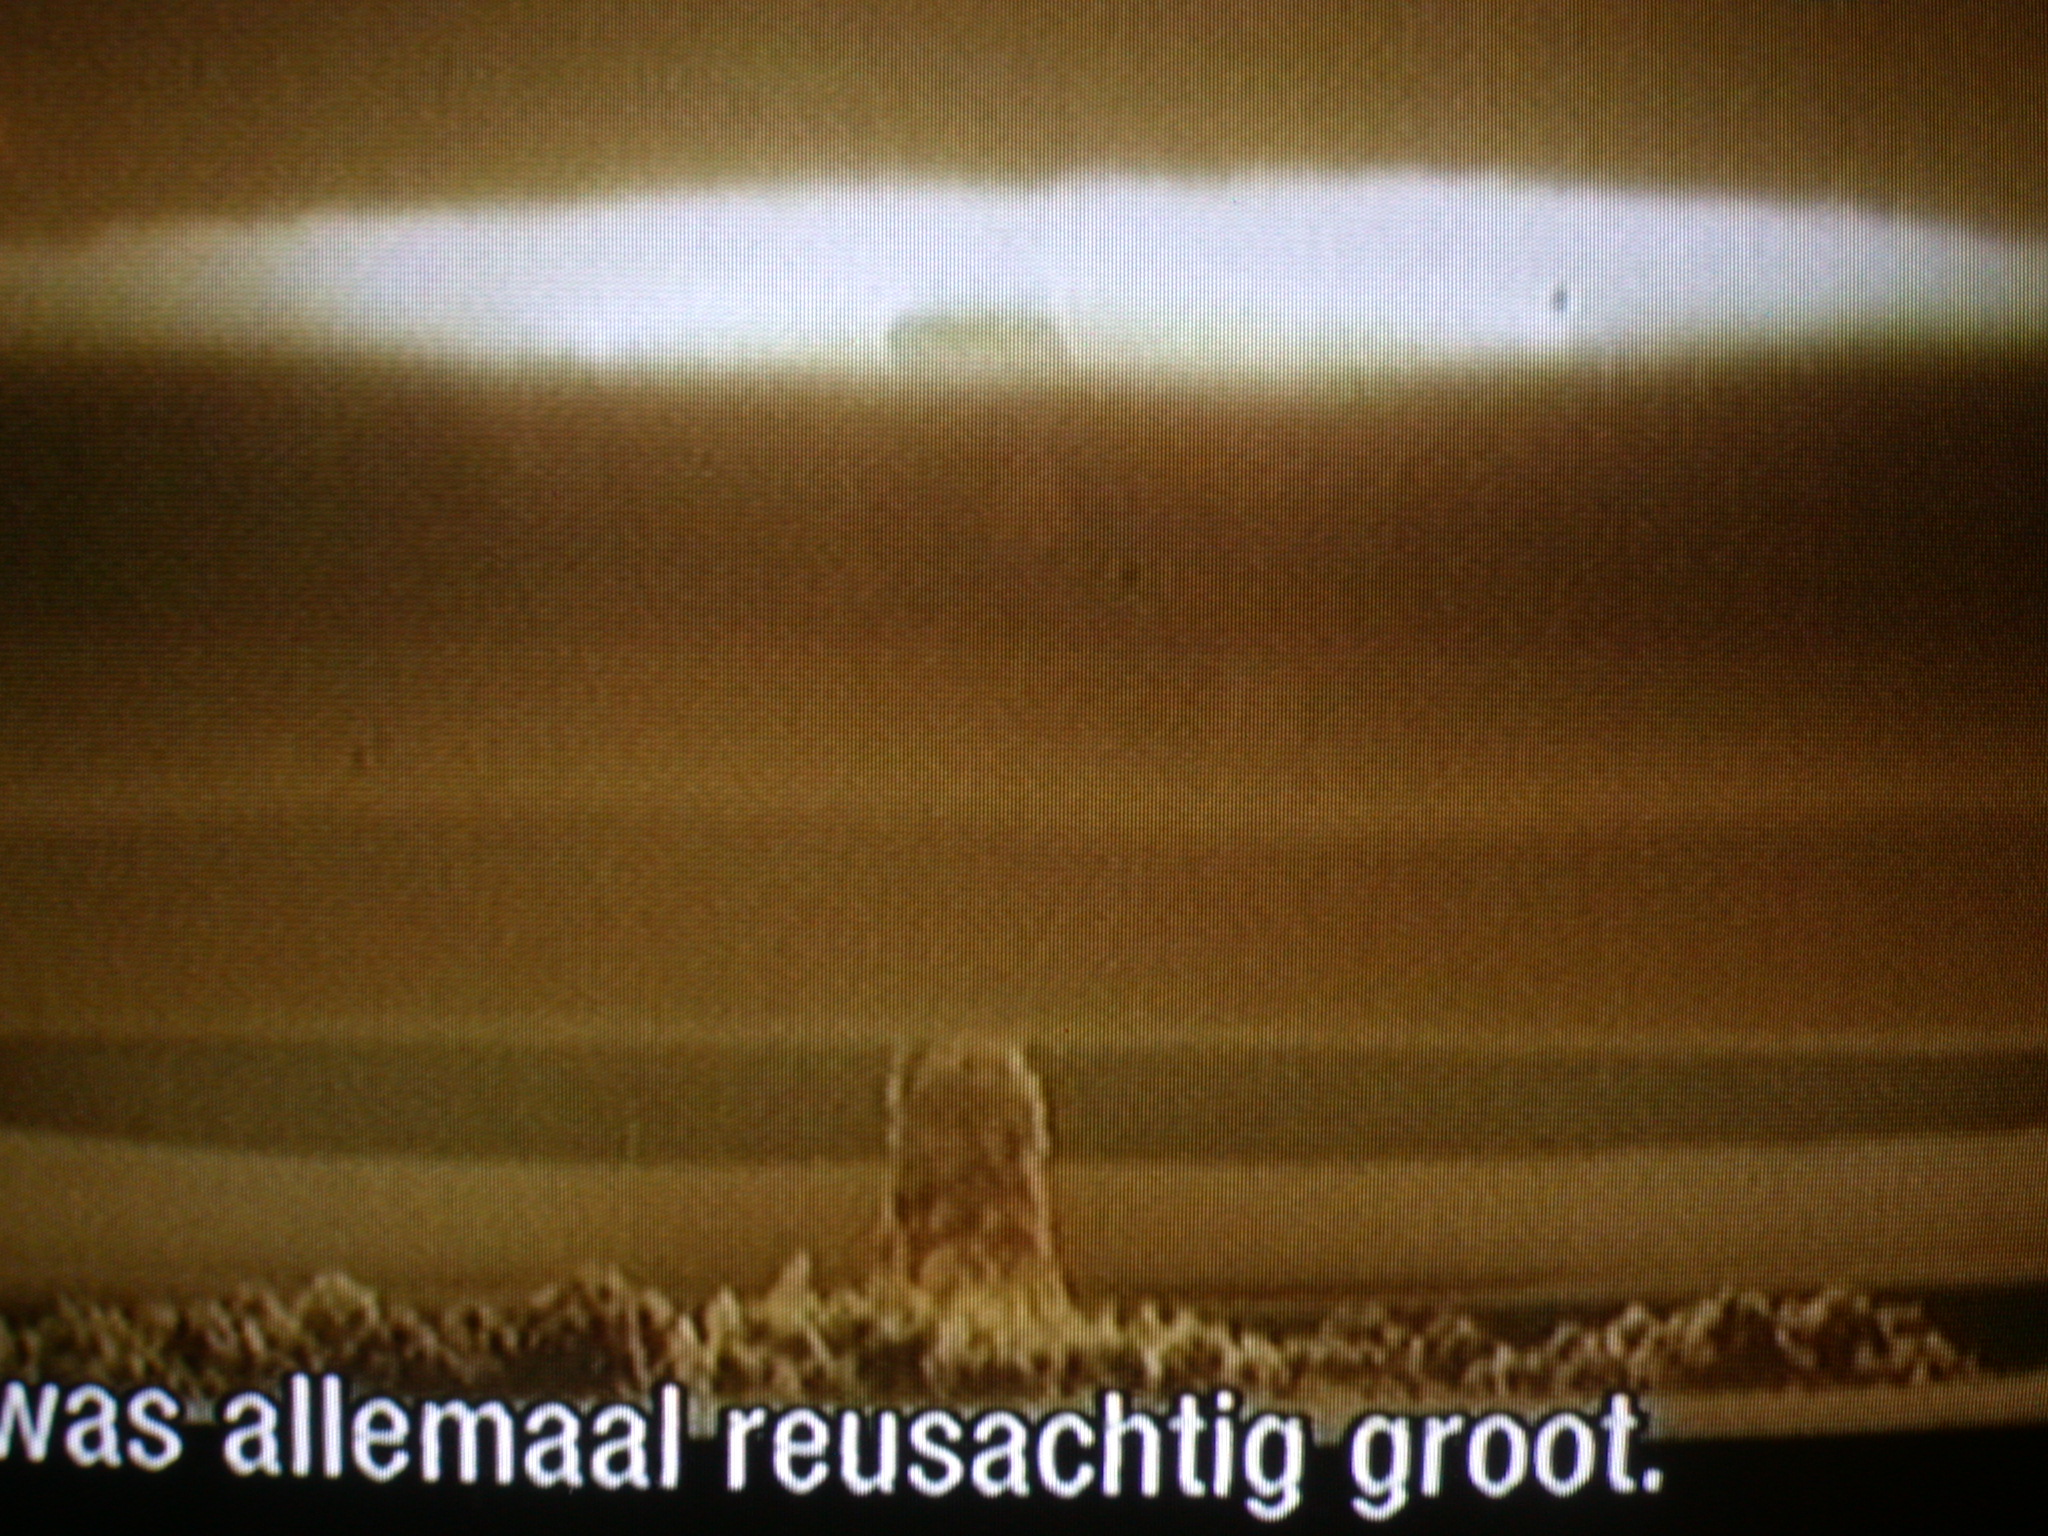 tv television bang nuclear explosion mushroom brown image